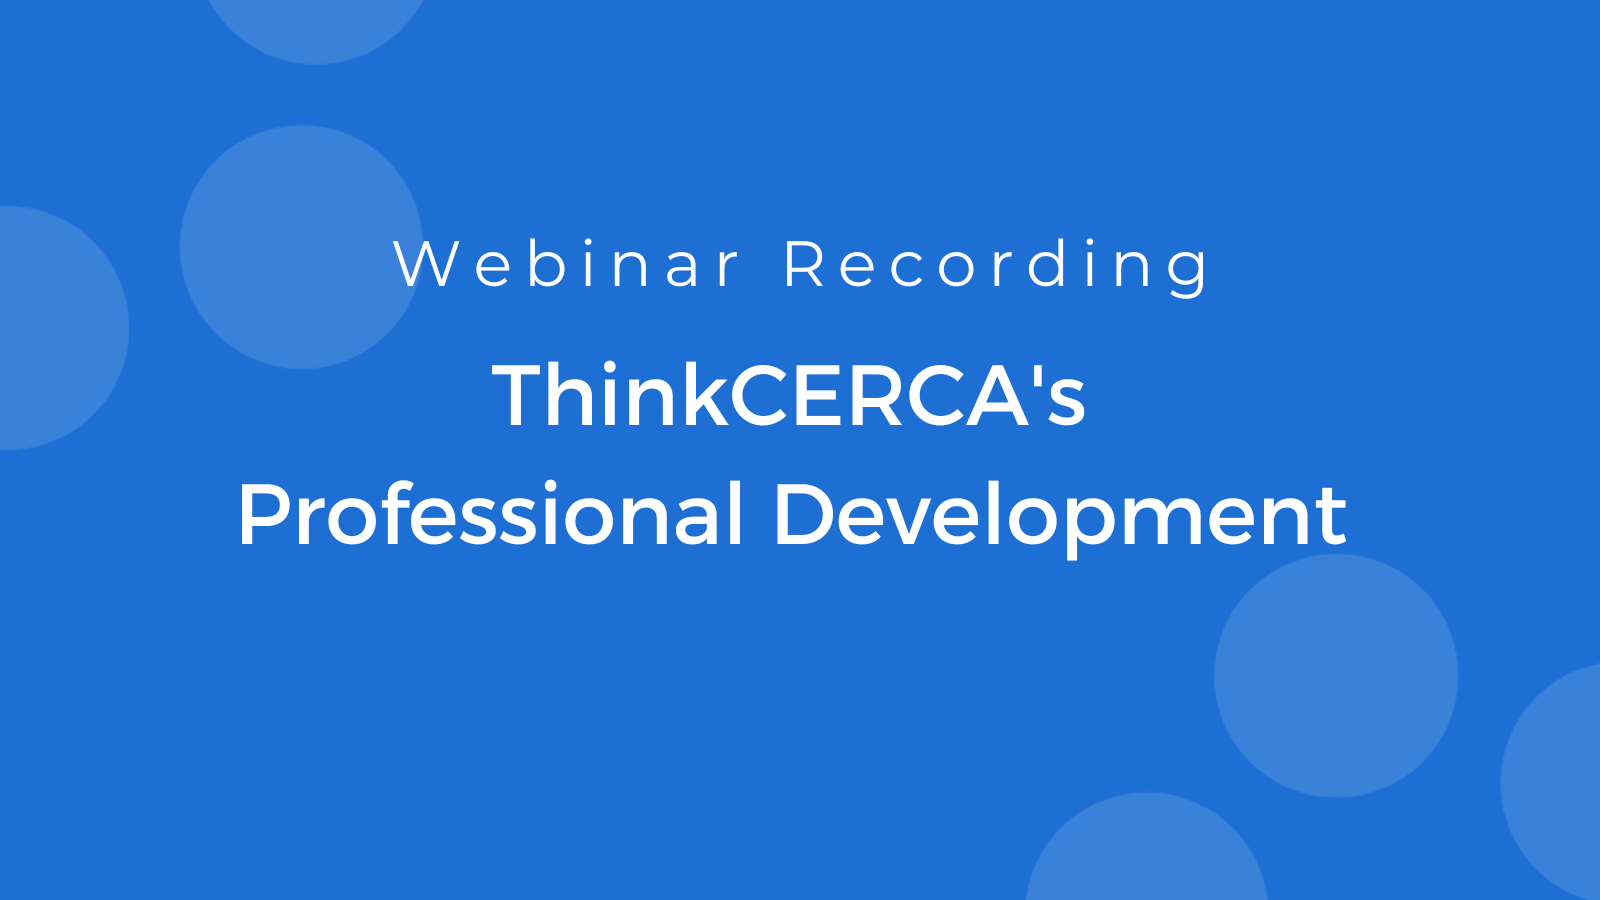 ThinkCERCA's Professional Development